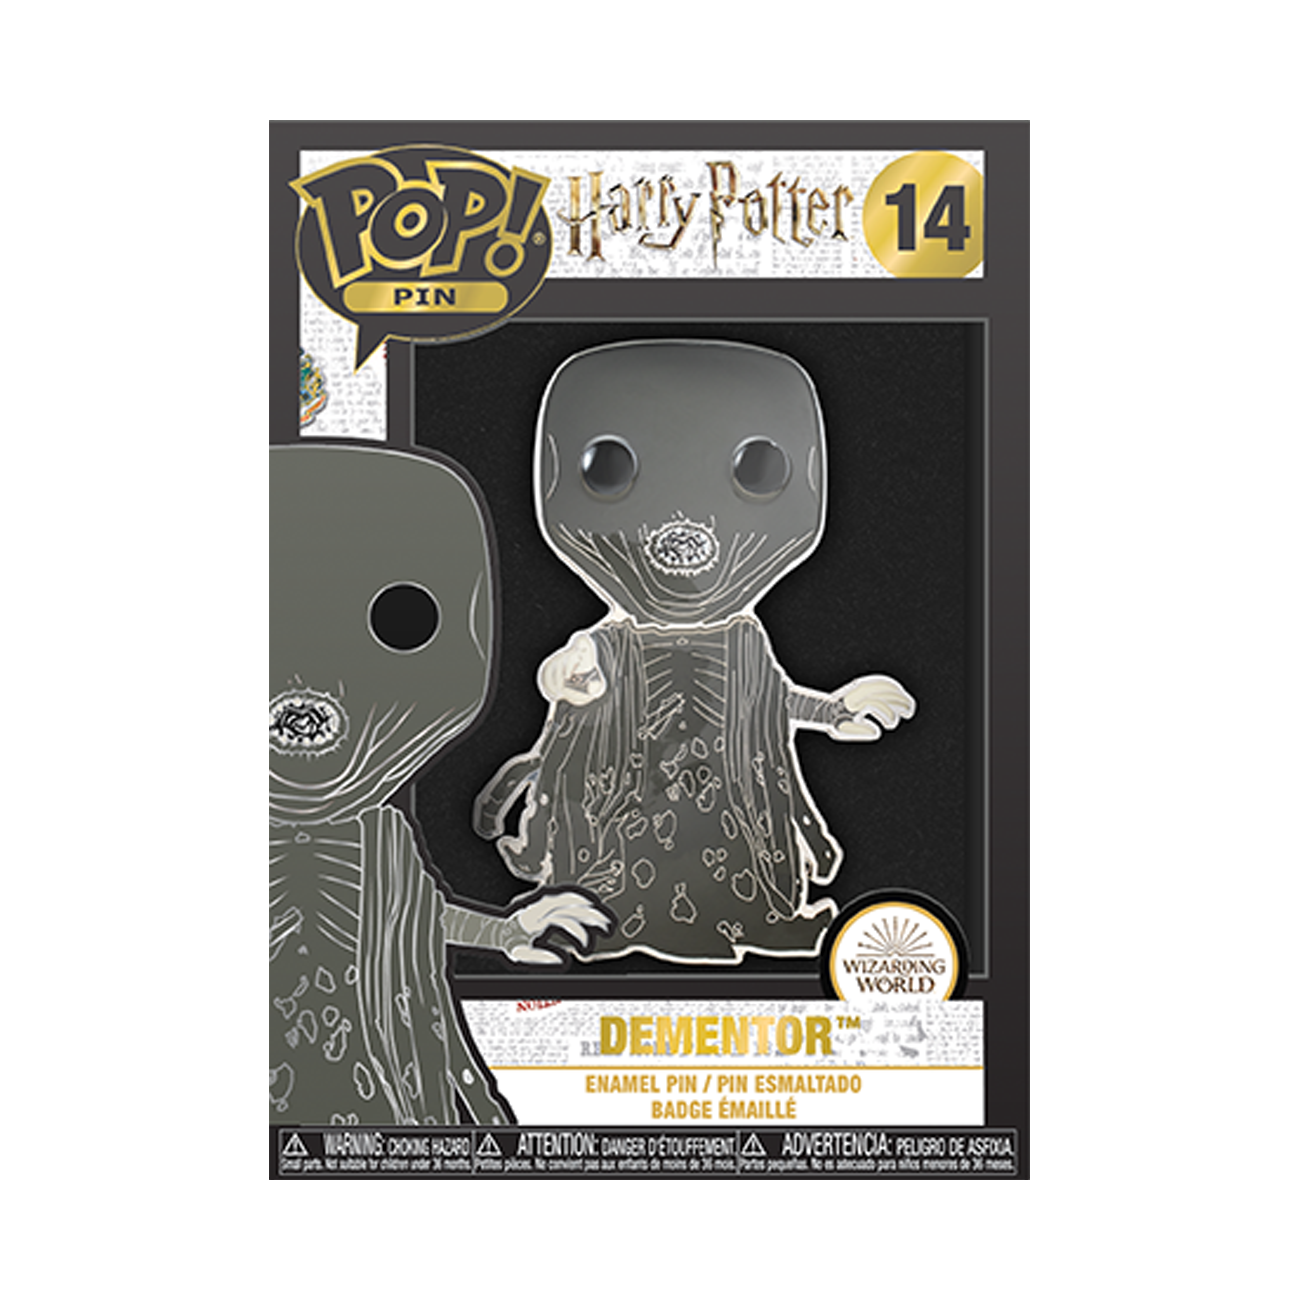 FUNKO POP! PIN Dementor - Harry Potter Pop Pin